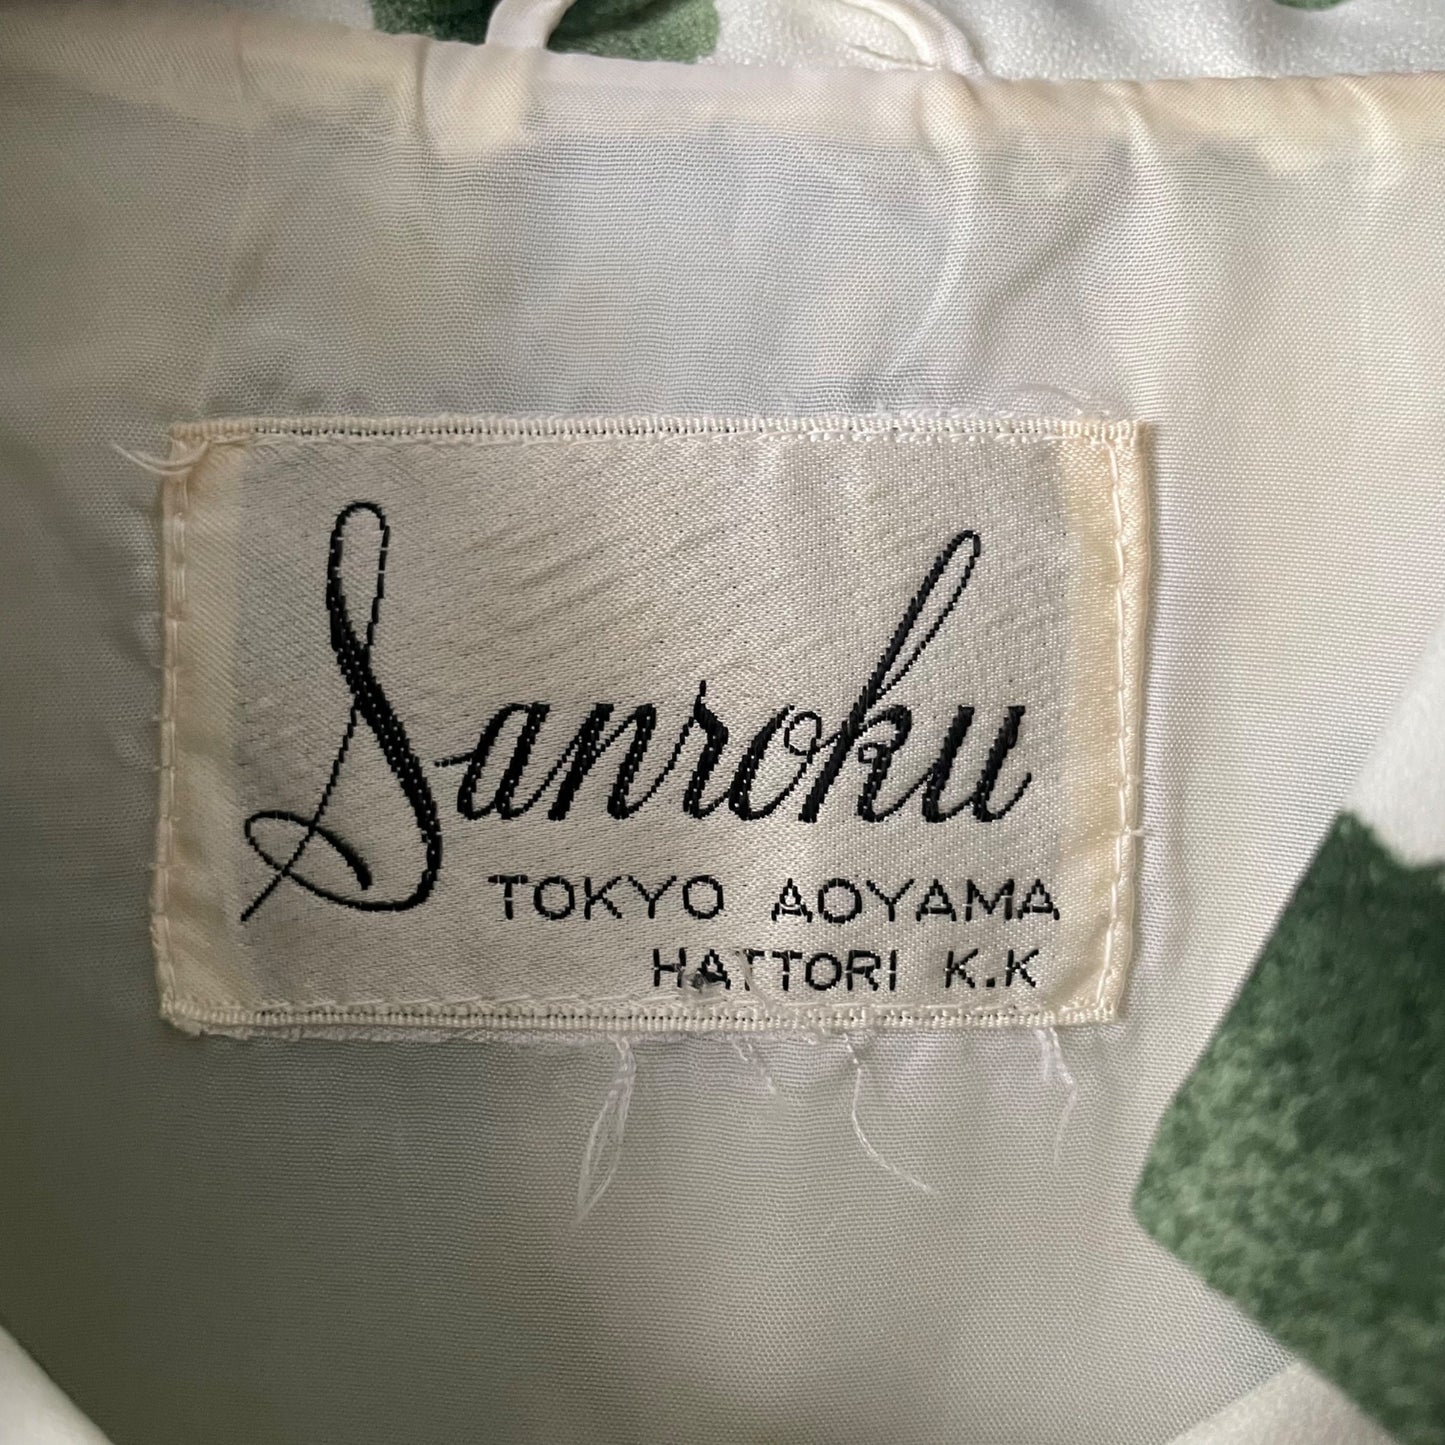 Sanroku Green Botanical Asian Style Button Up Collared Shirt Women's Size Small